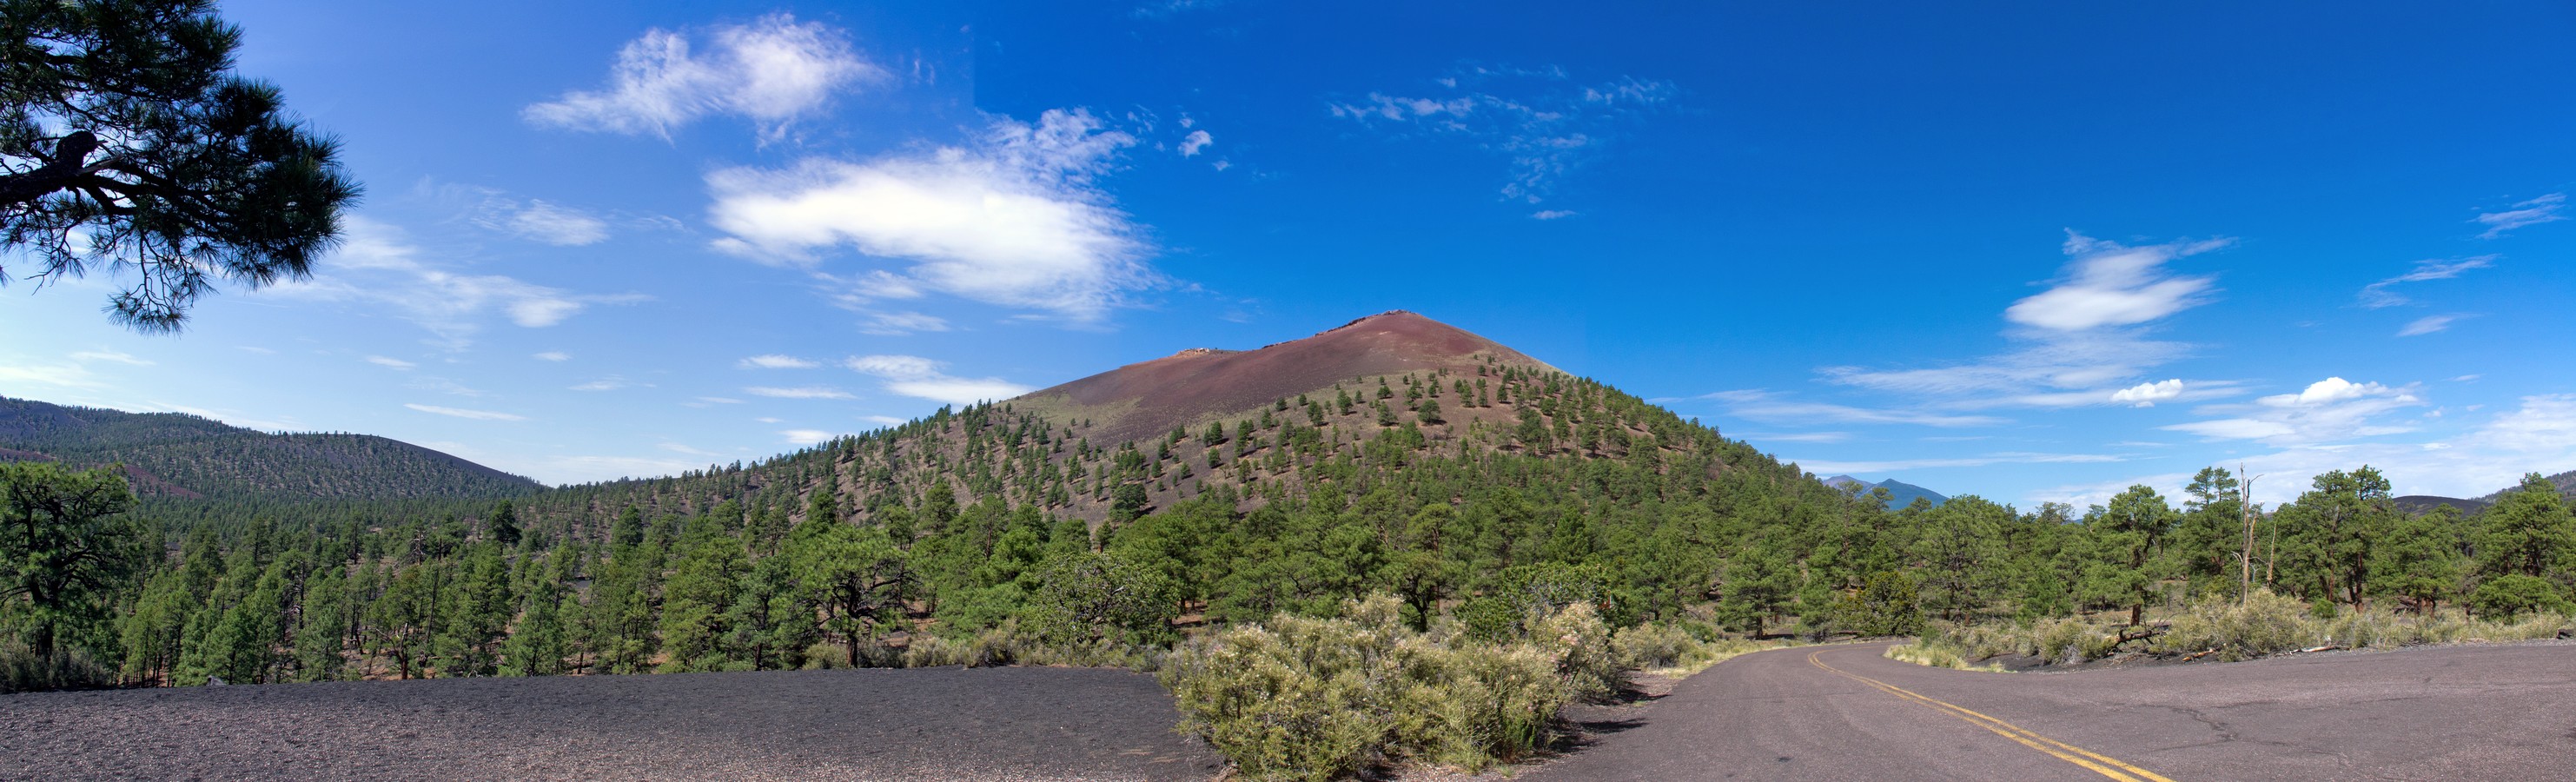 Sunset Crater Volcano National Monument Cinder Hills Overlook 